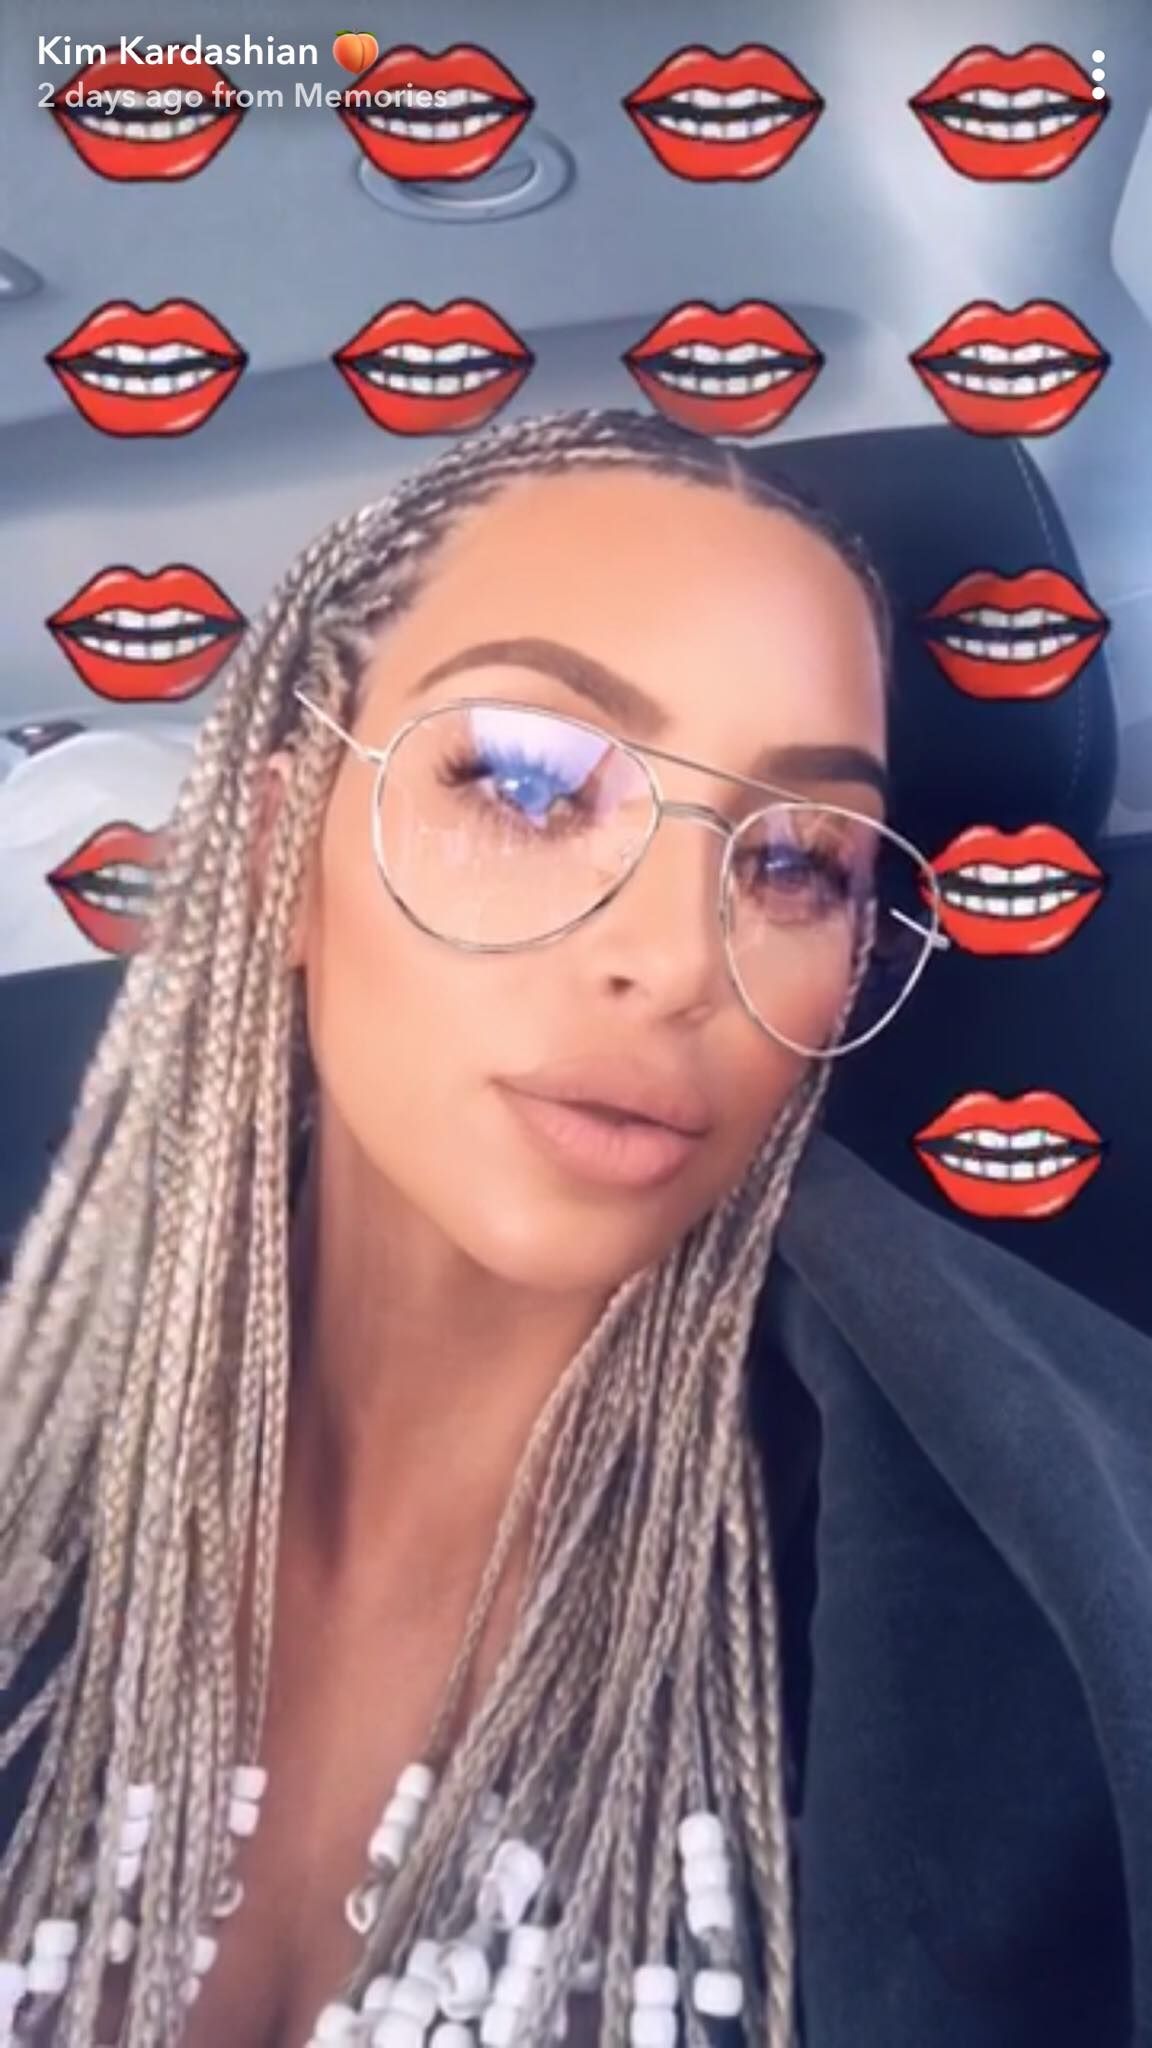 Kim Kardashian defends her decision to wear cornrows